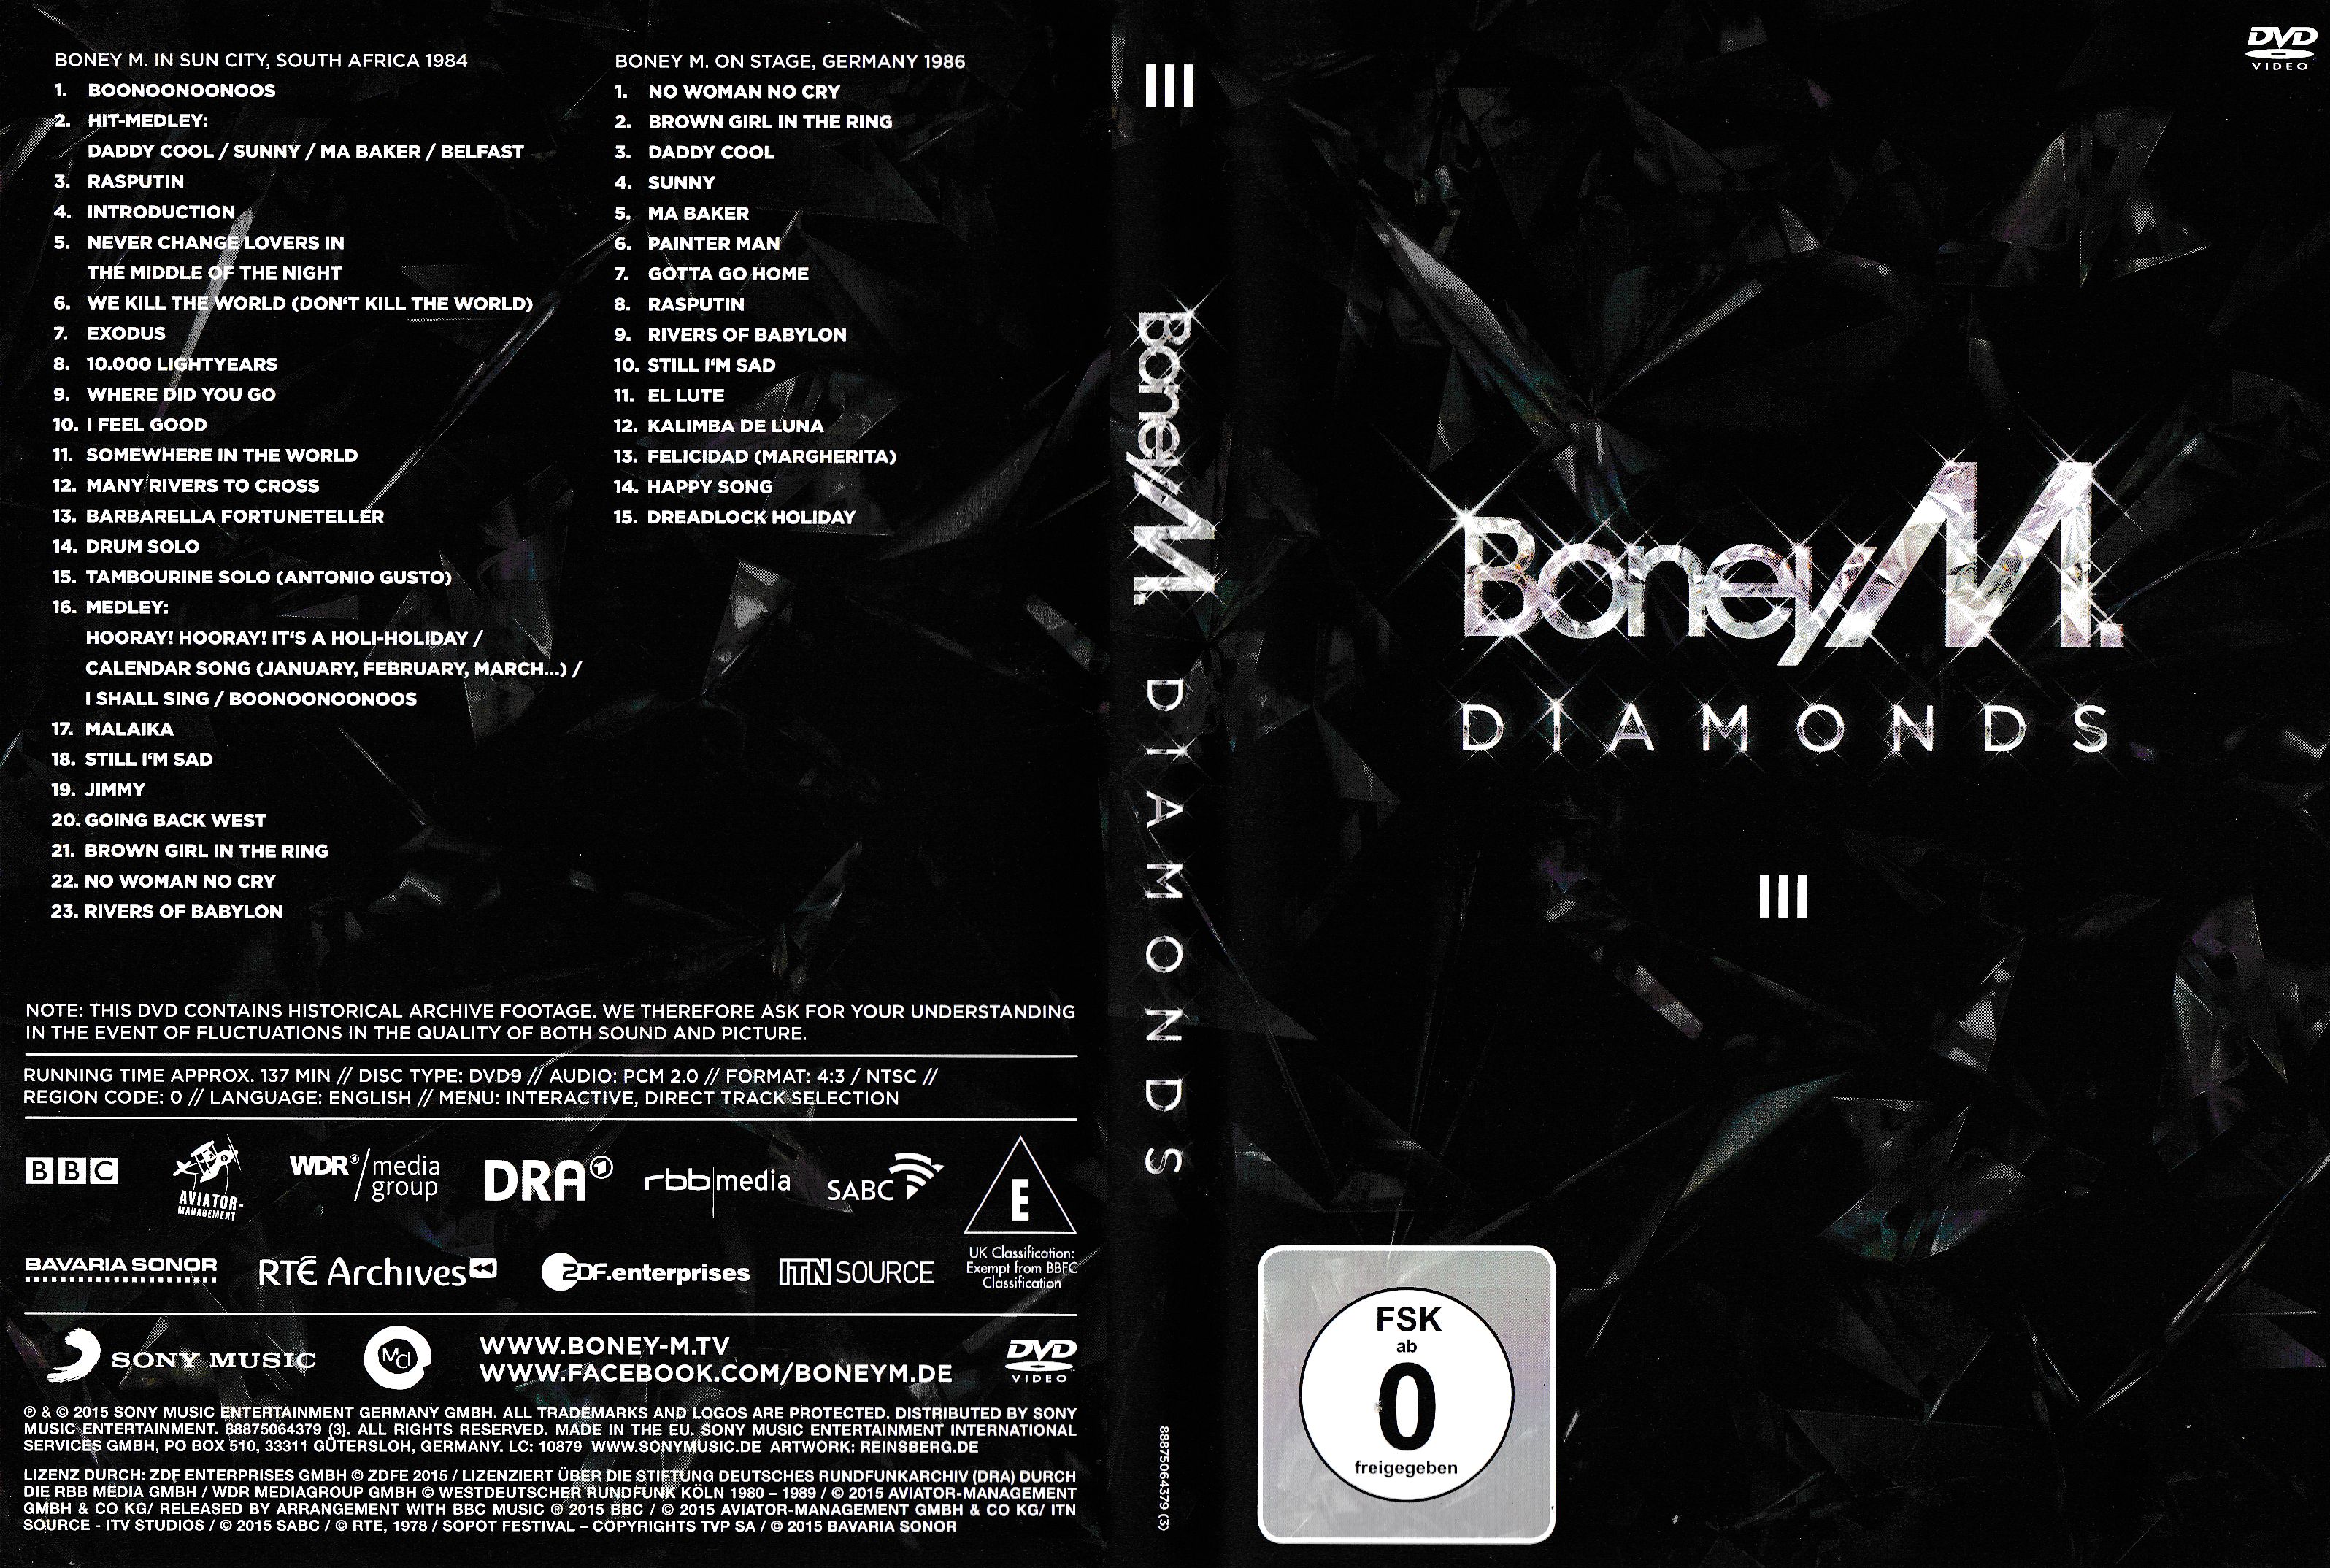 Jaquette DVD Boney M - Diamonds DVD Volume 3 